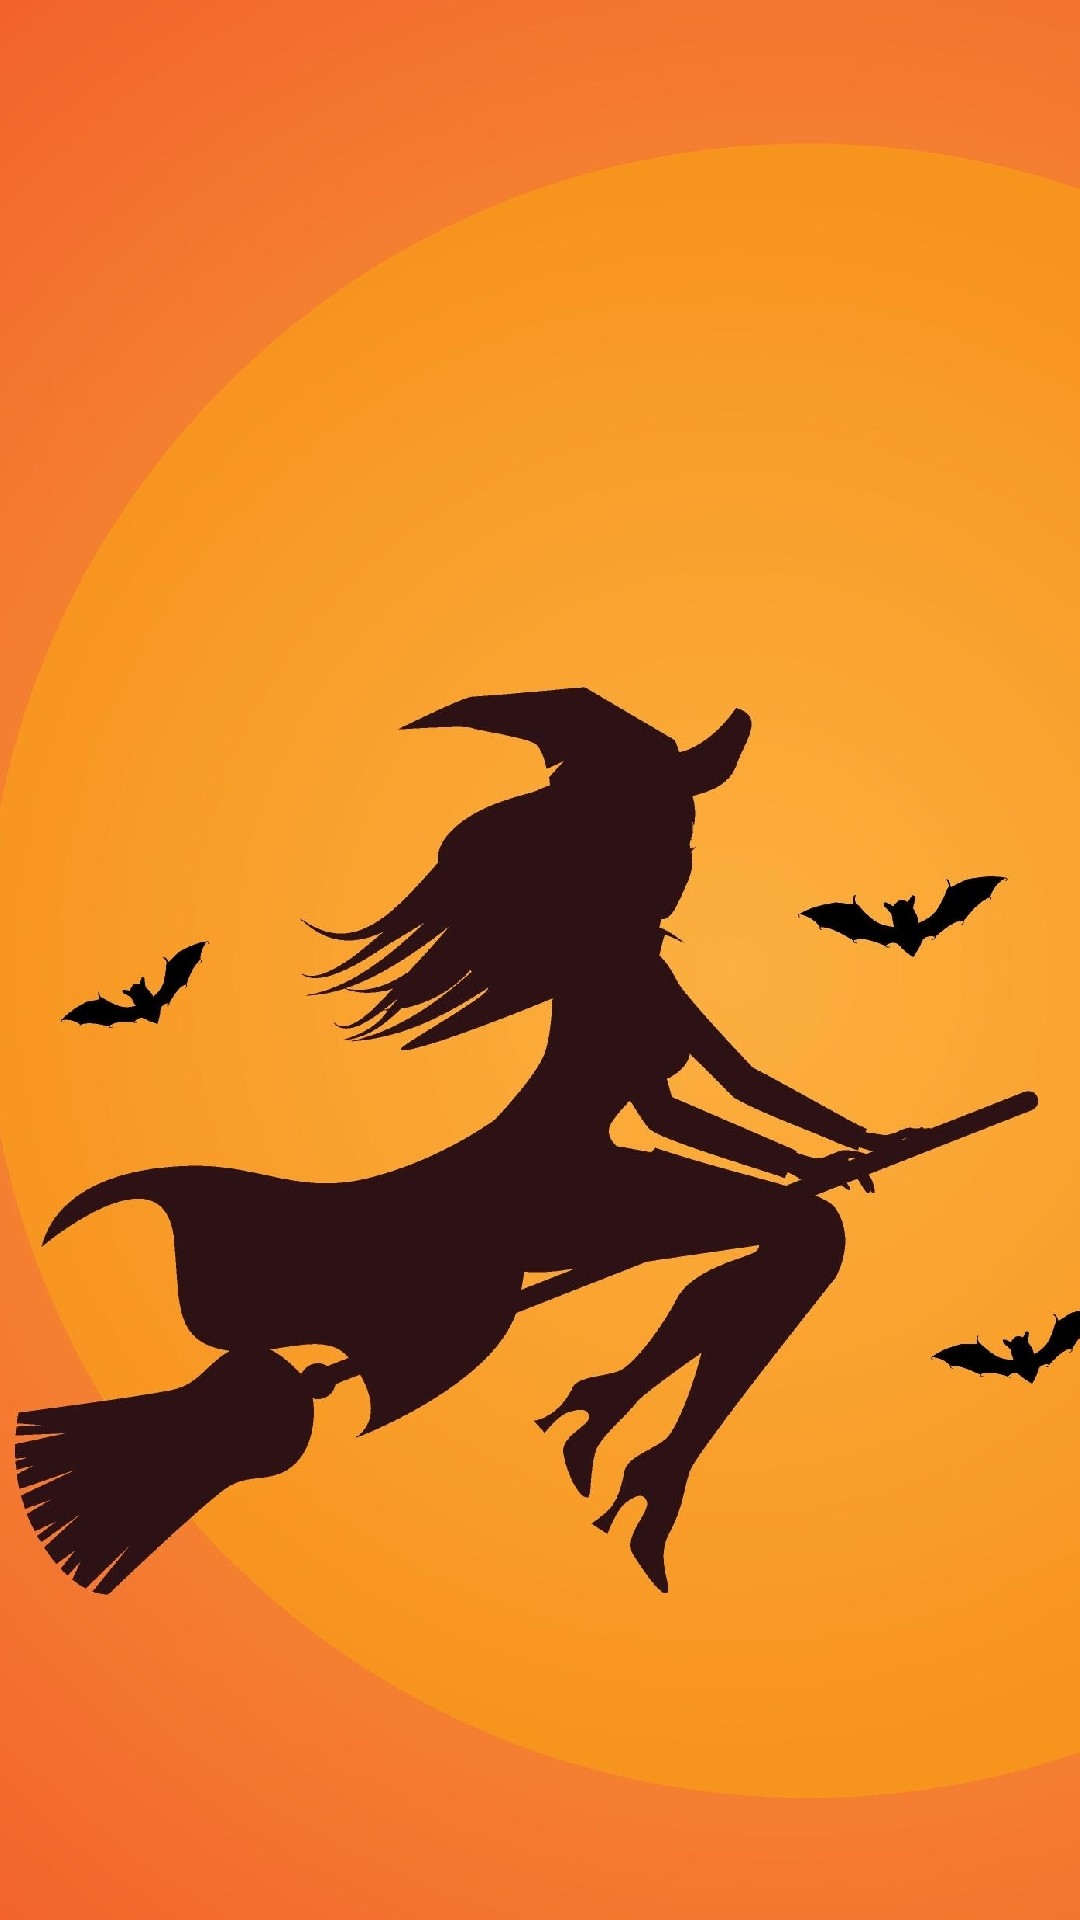 Free HD Halloween iPhone Wallpaper Backgrounds.